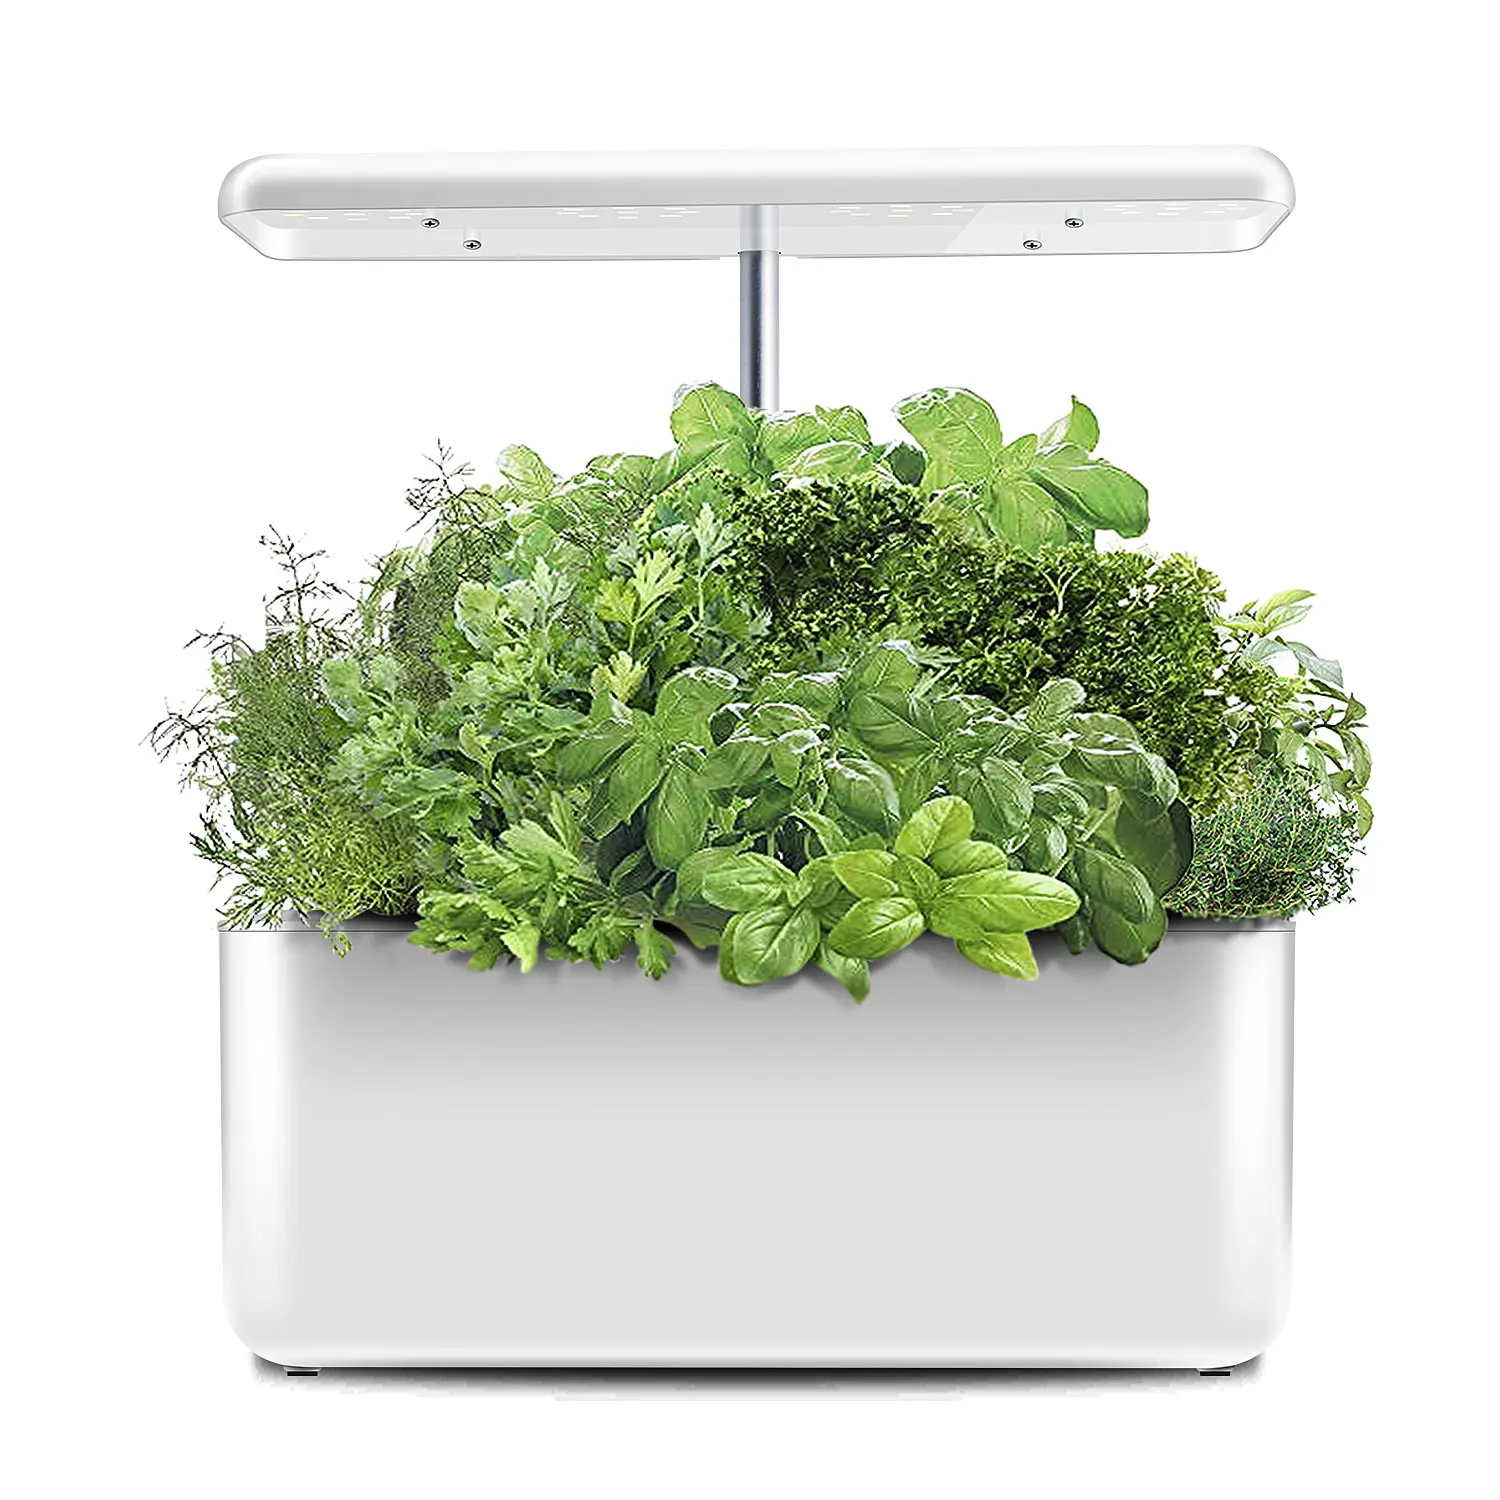 

SHENPU Automate Indoor Garden Self Watering Fower Pot Led Light Plant Lazy Flower Pot